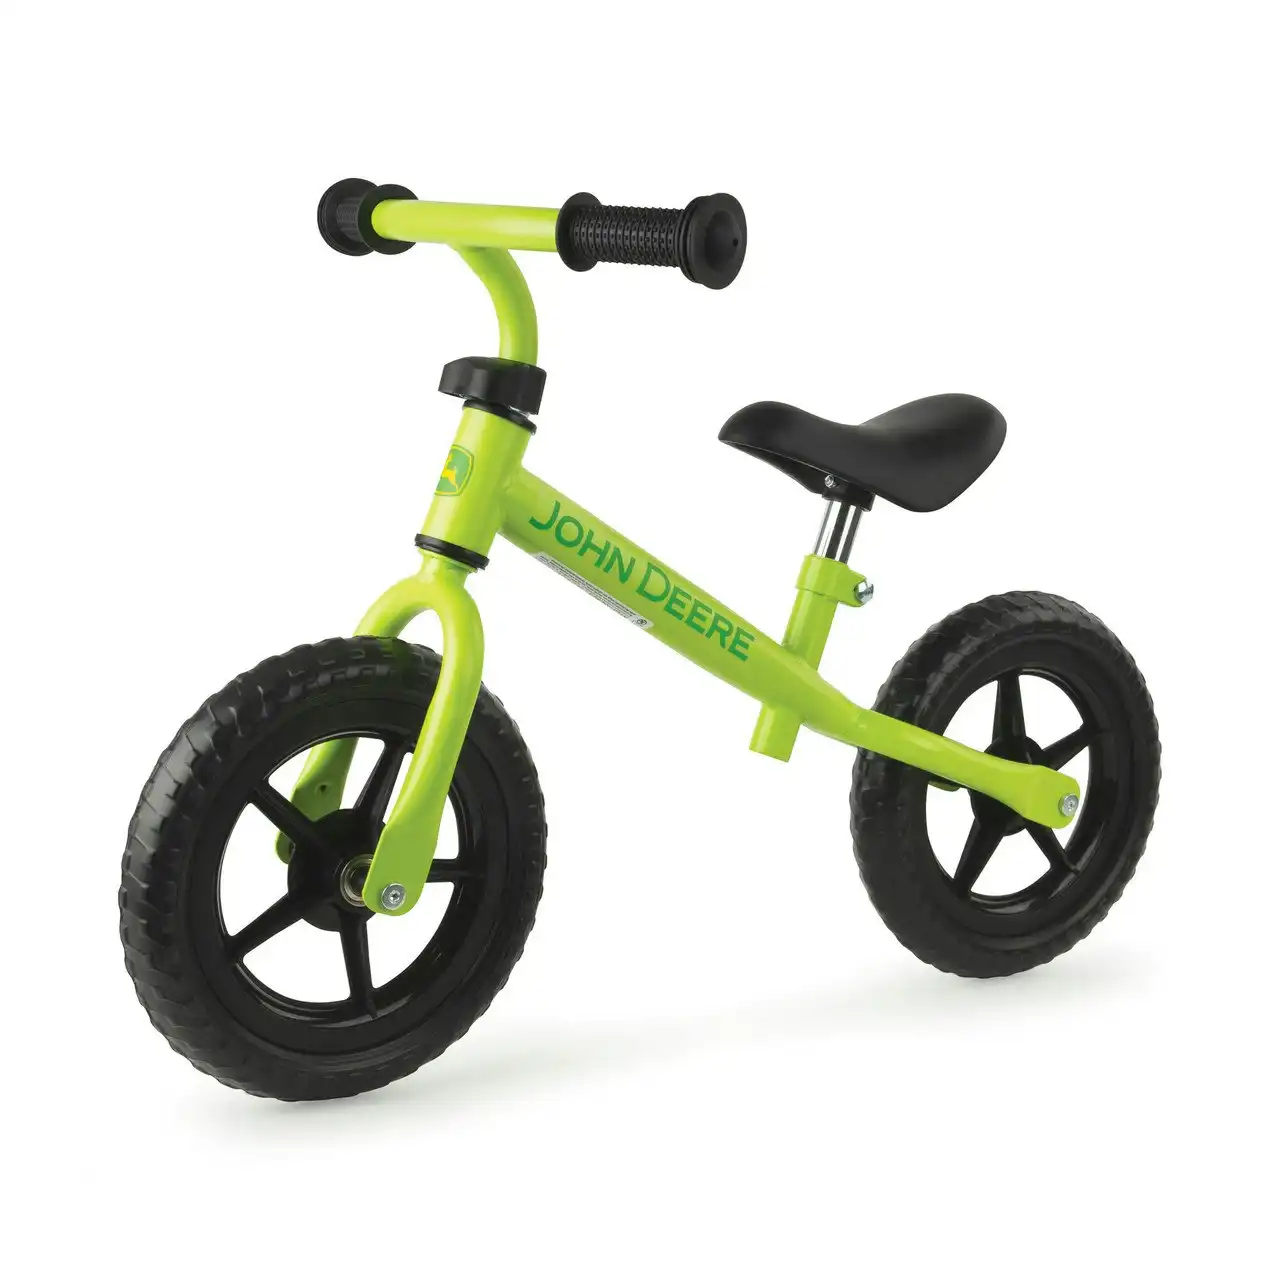 John Deere - 10'' Toddler Balance Bike (25cm)